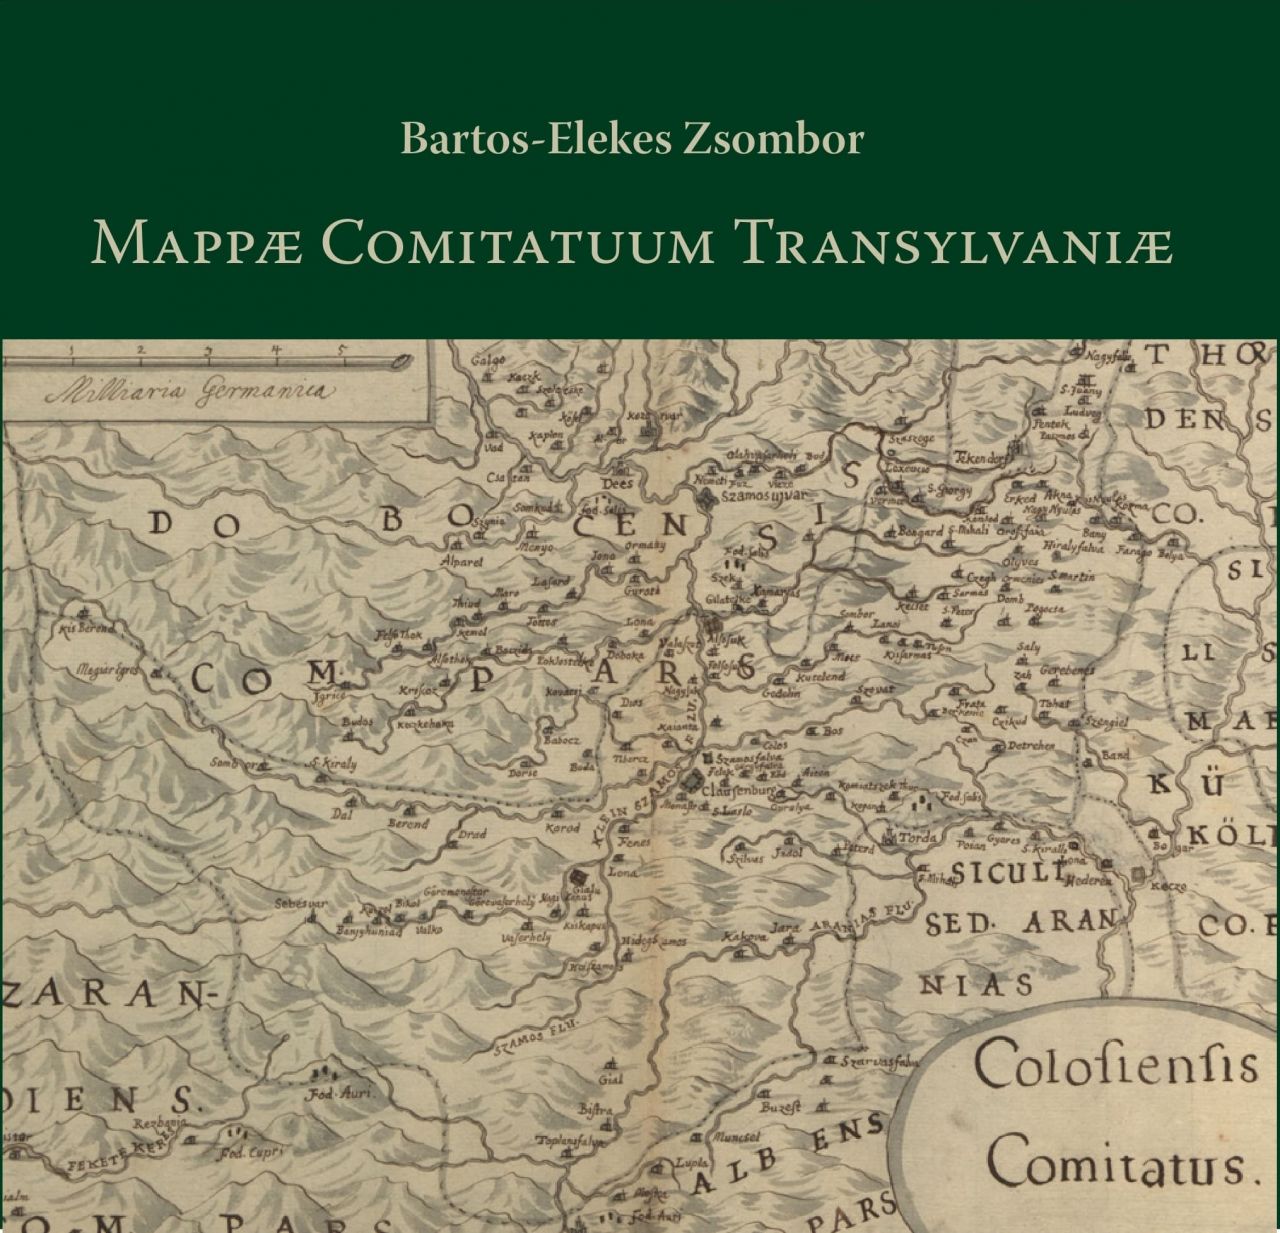 Mappa comitatuum transylvania